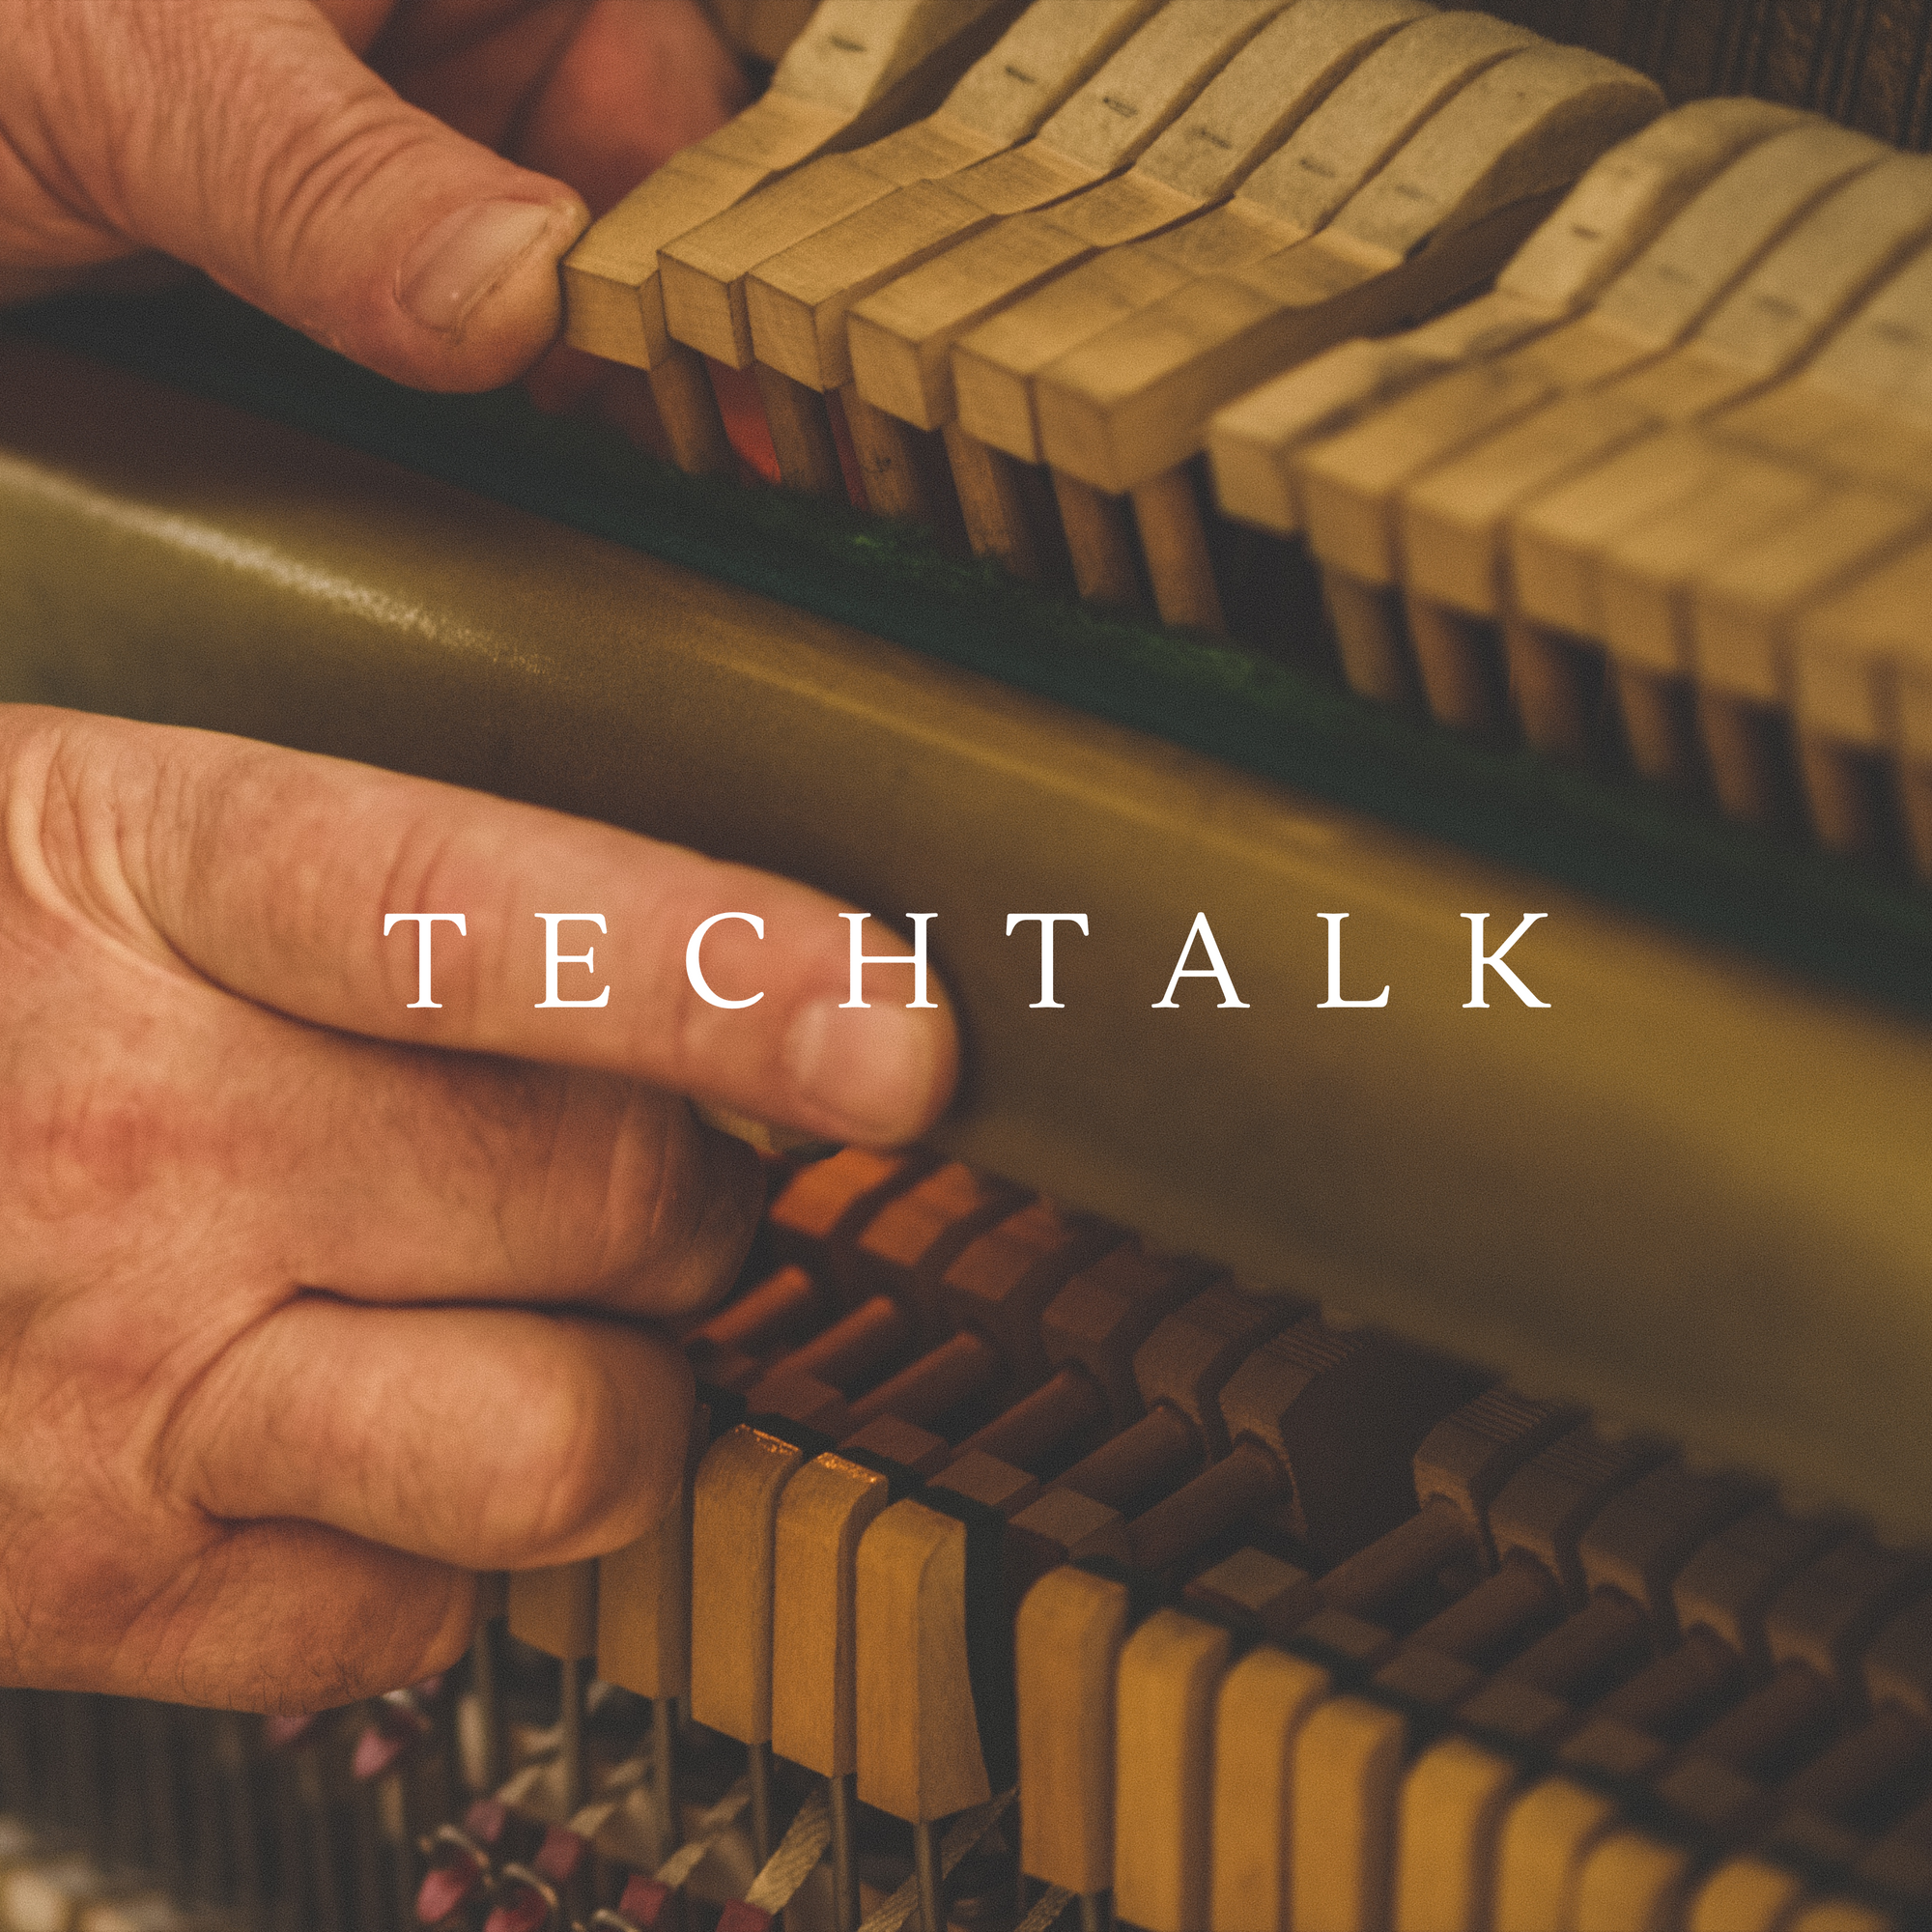 Piano tech talk - Ease of play 